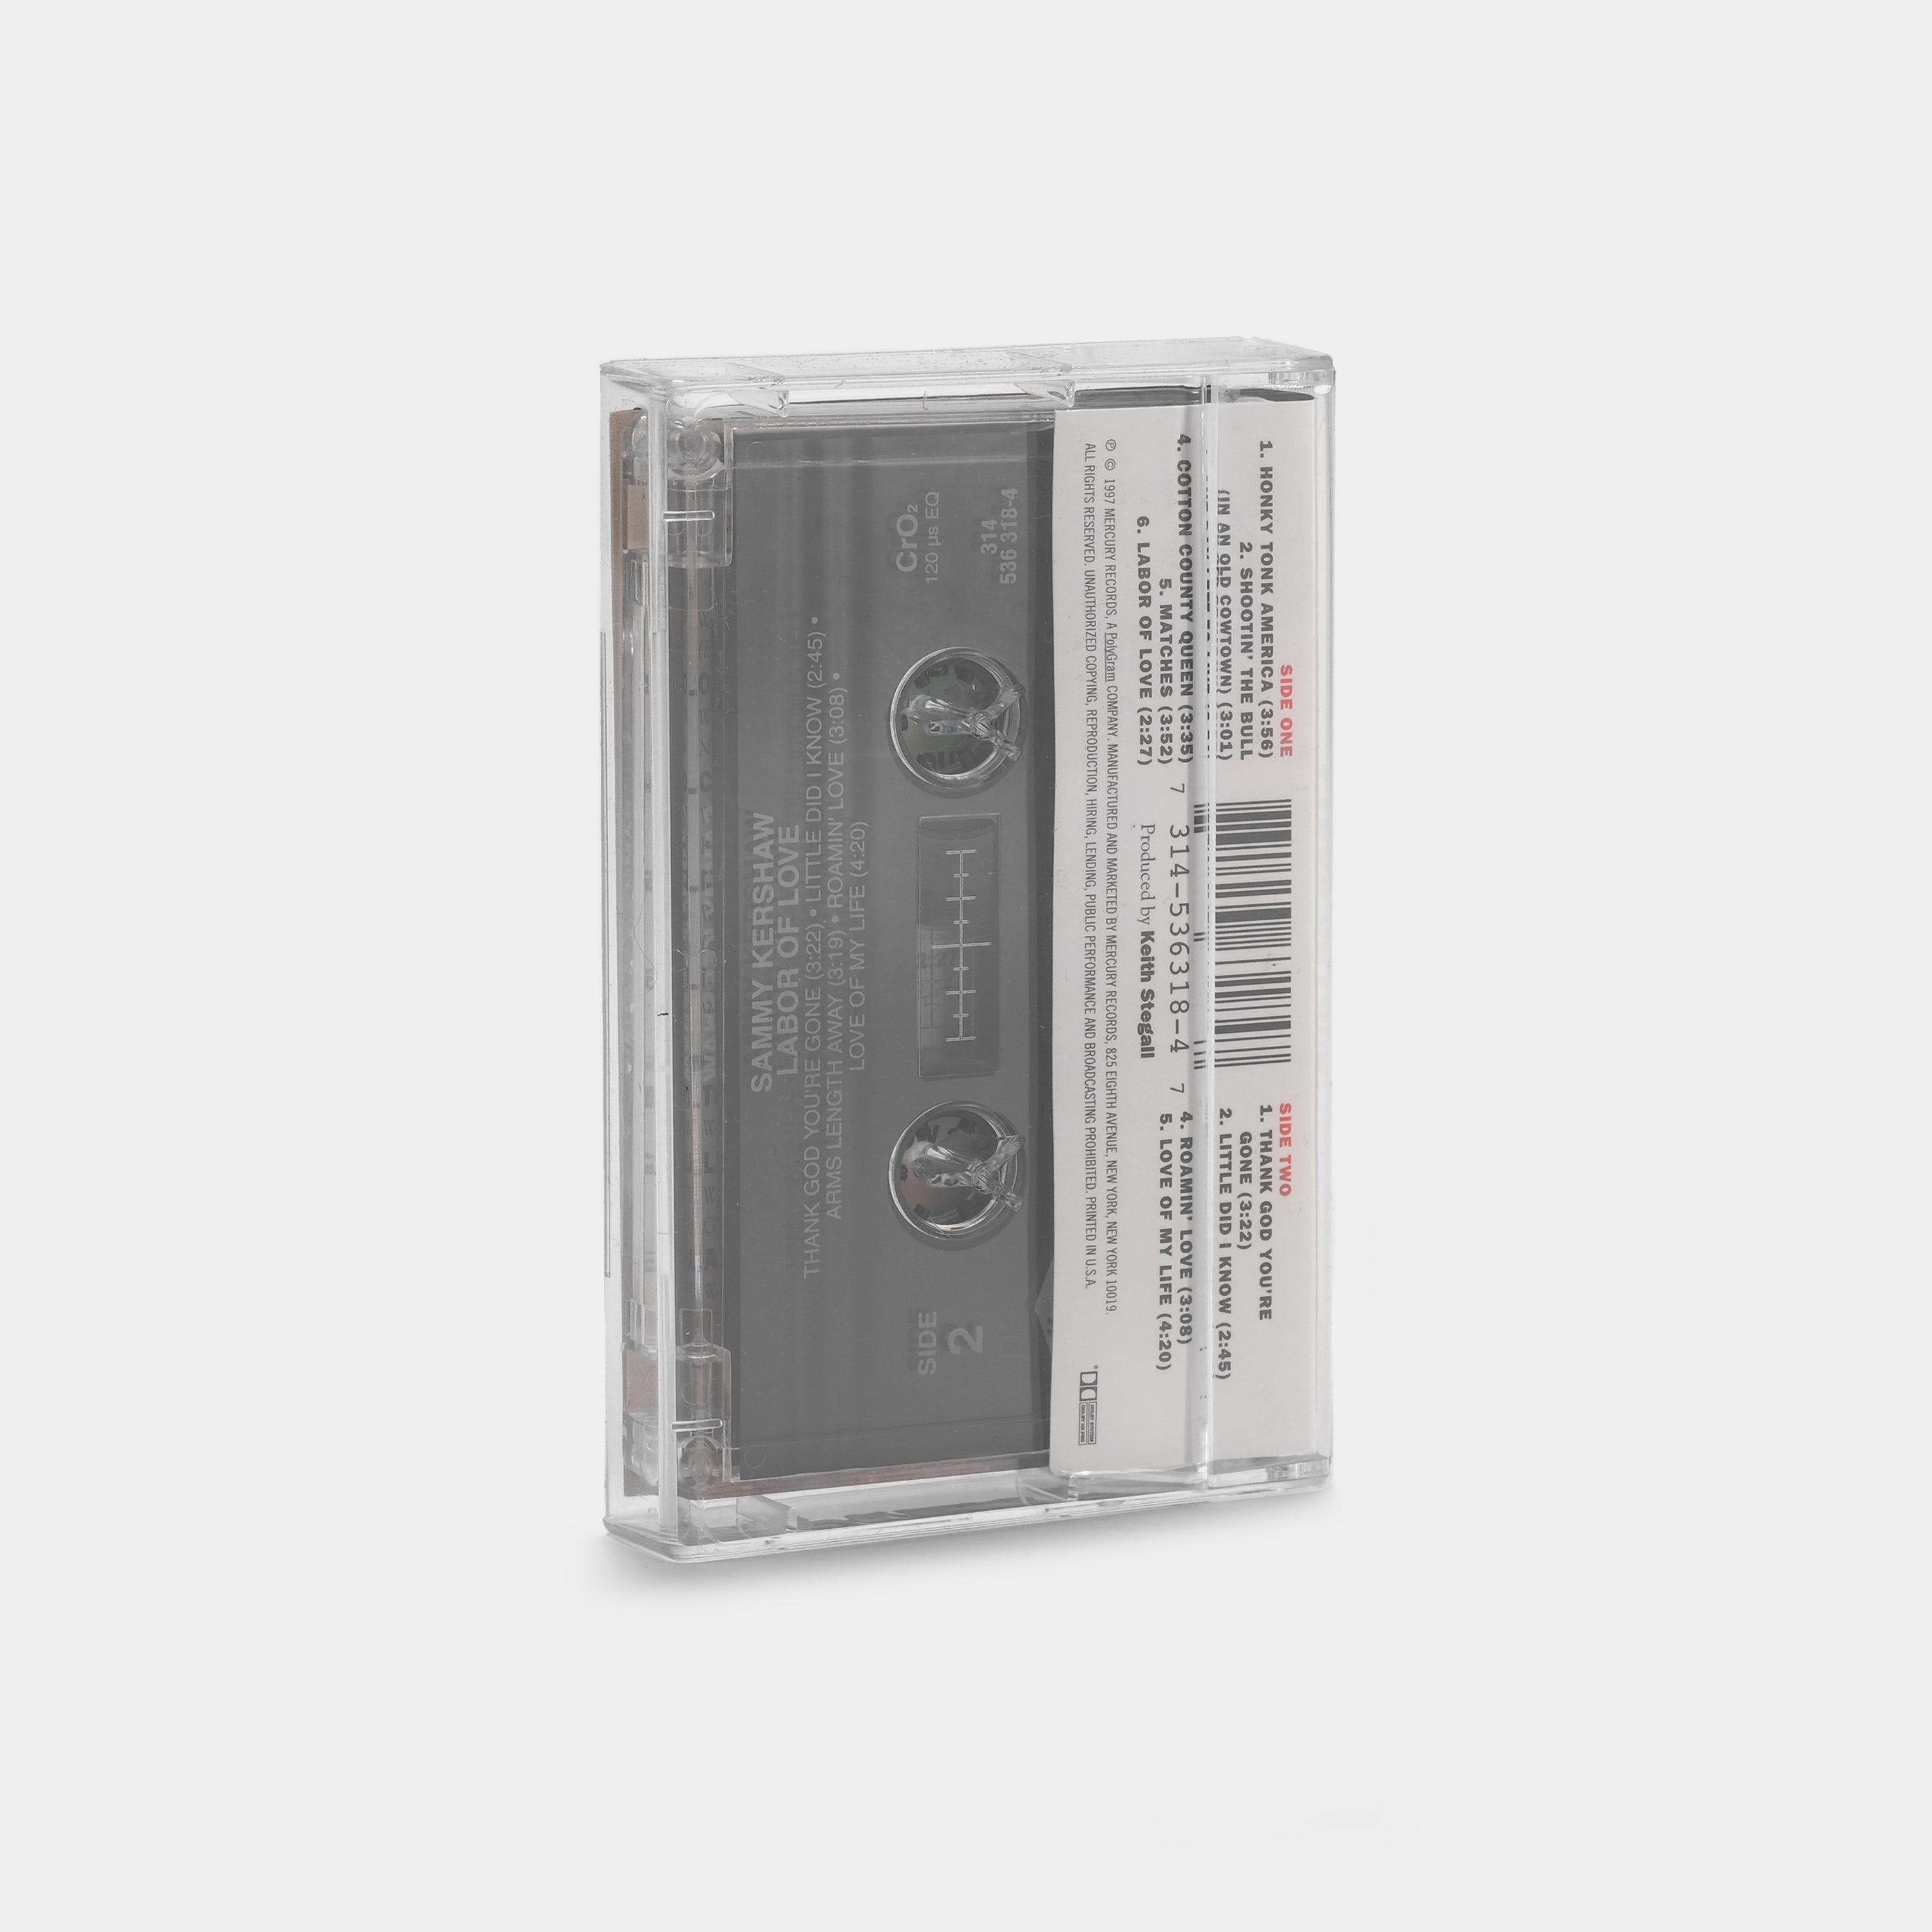 Sammy Kershaw - Labor of Love Cassette Tape